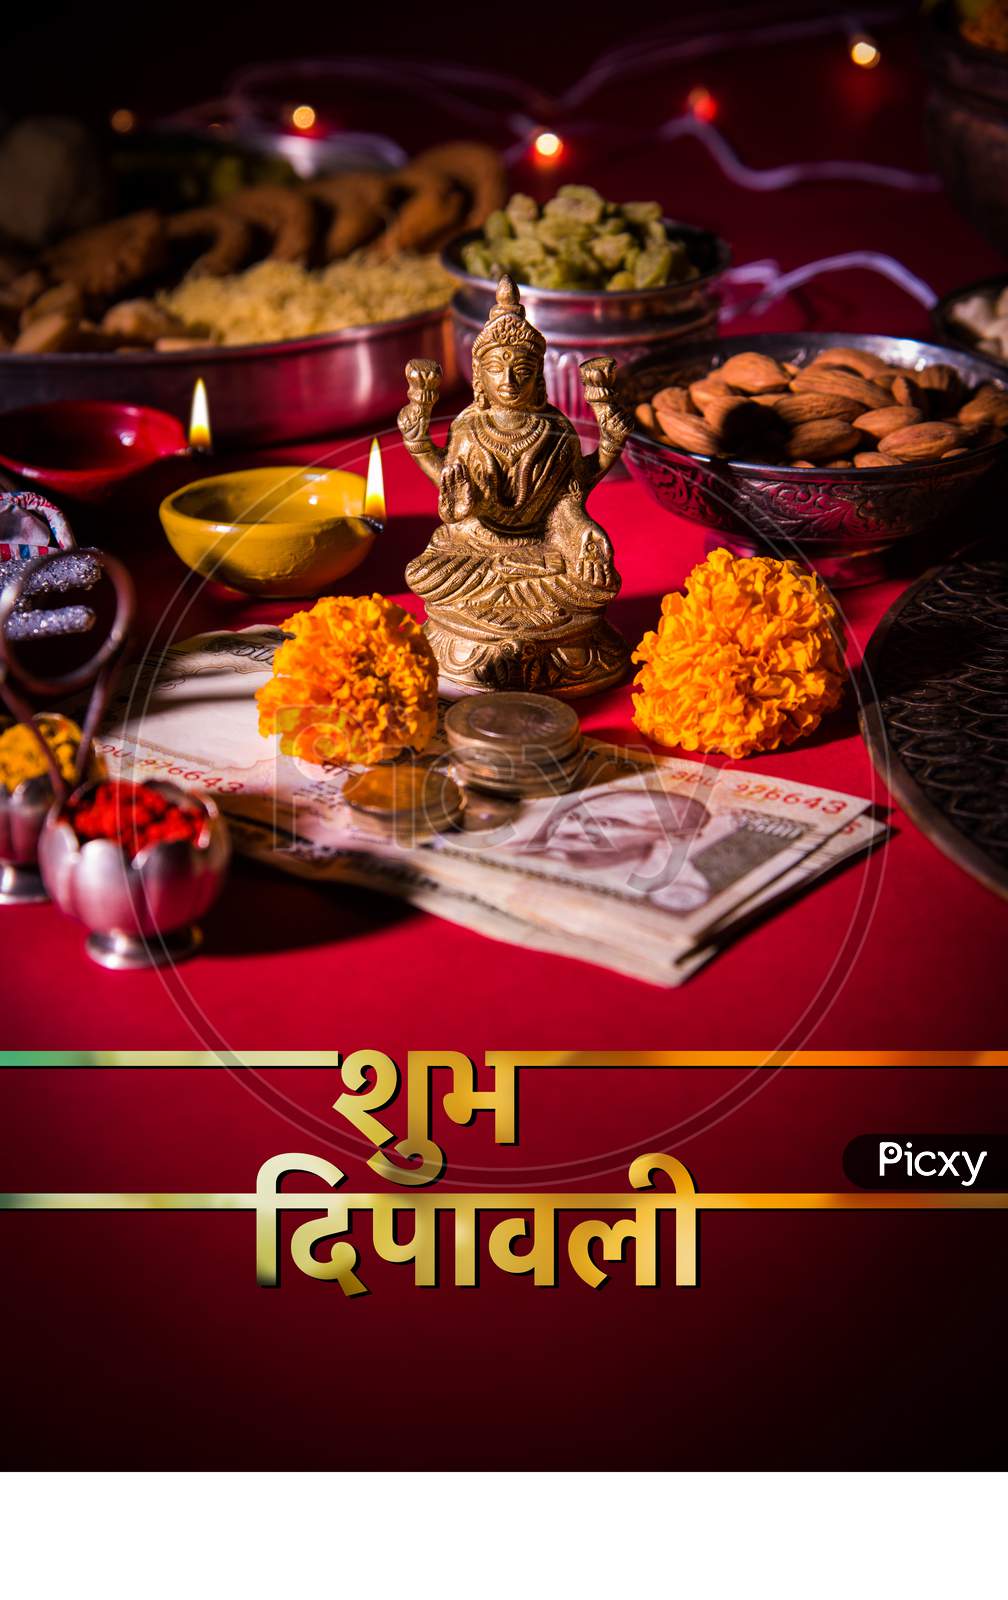 Happy Diwali greeting card showing Goddess Laxmi, sweets etc